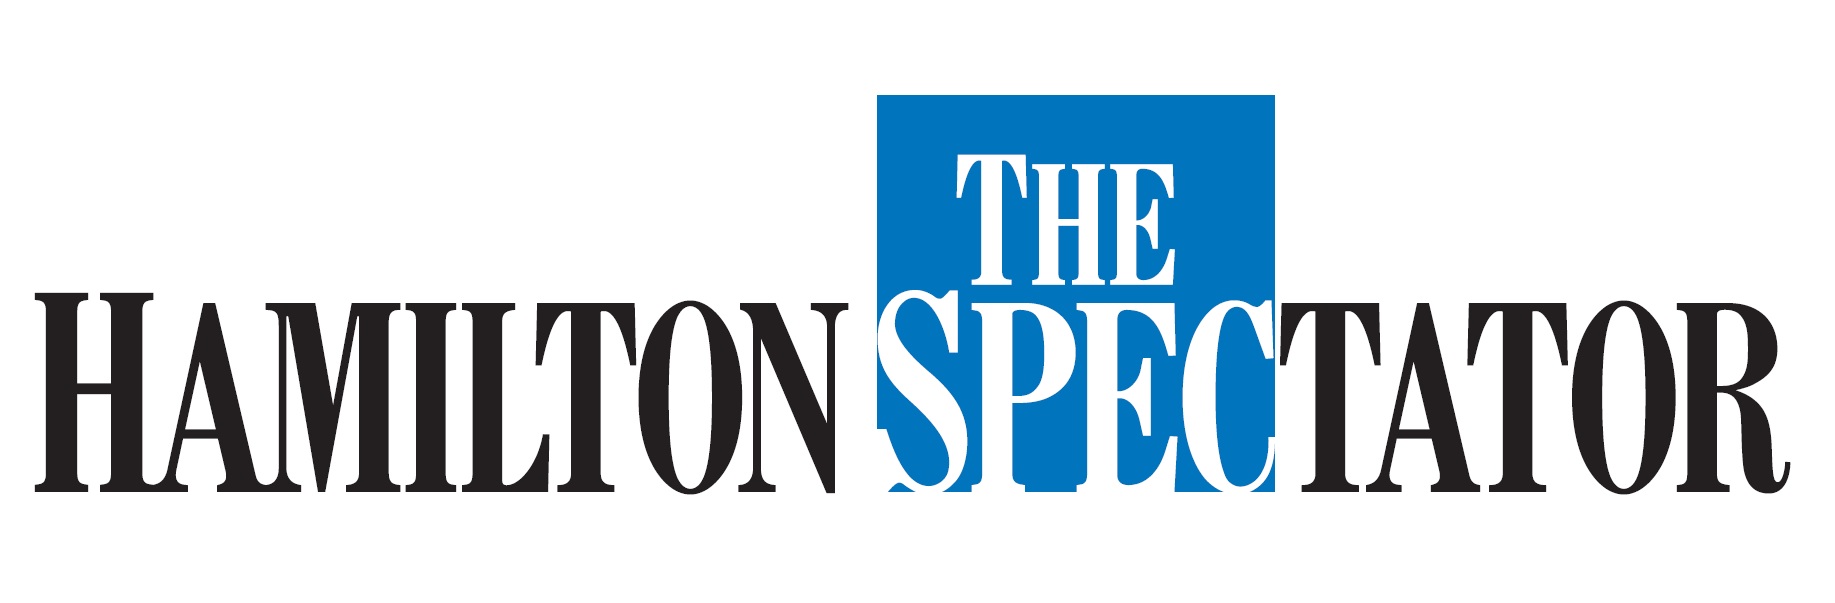 The Hamilton Spectator logo.jpg